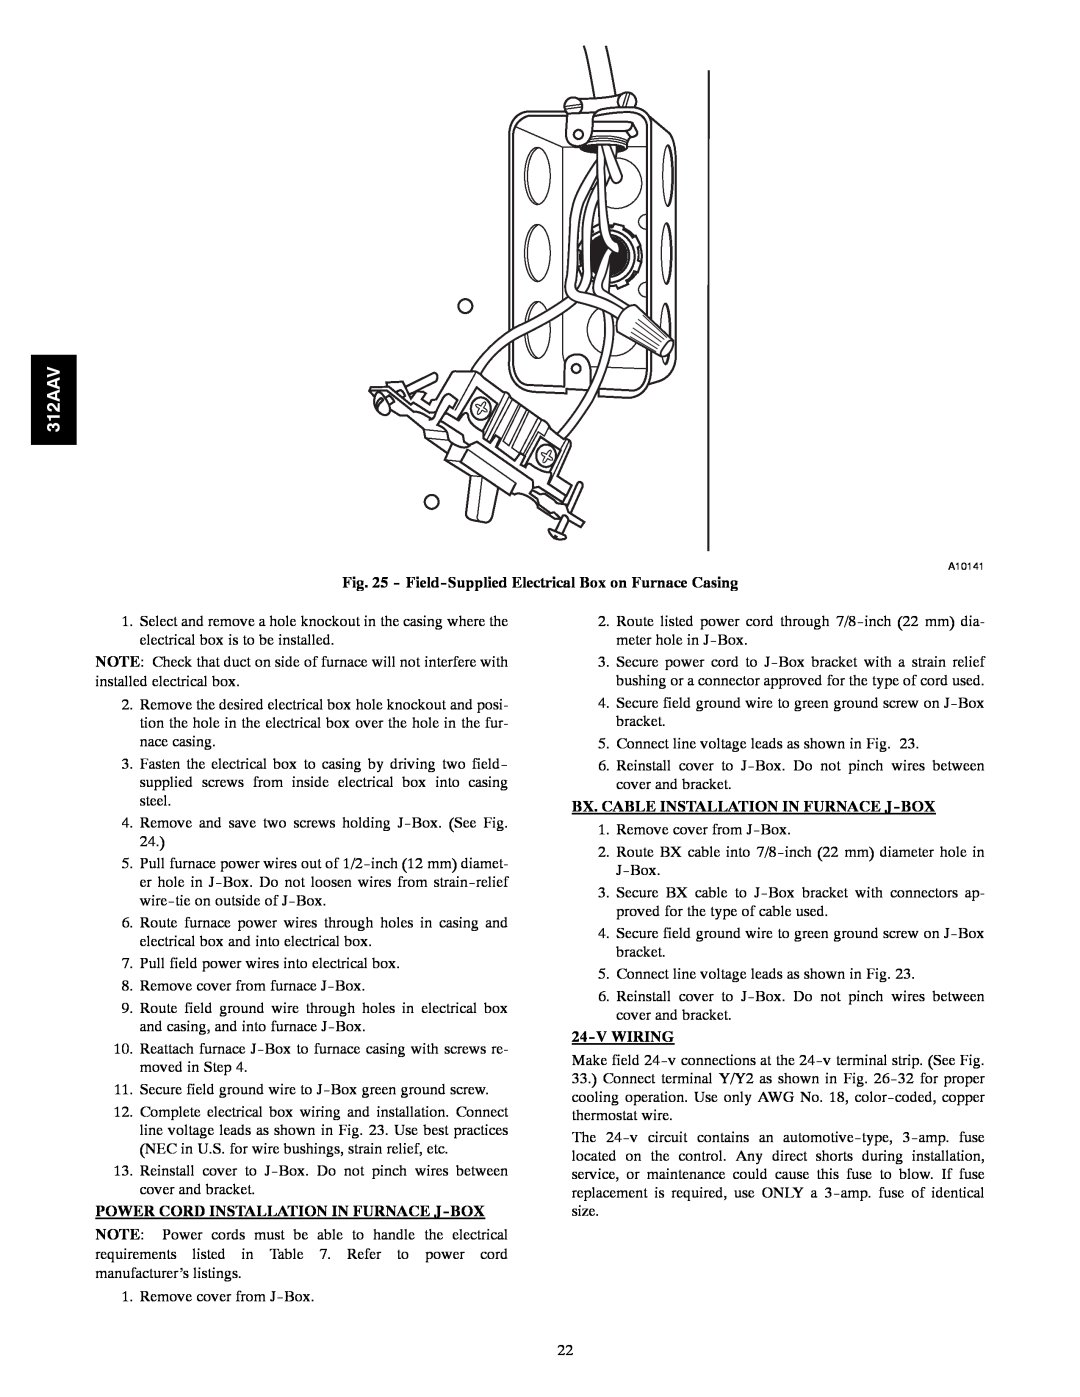 Bryant 312AAV/JAV Power Cord Installation In Furnace J-Box, Bx. Cable Installation In Furnace J-Box, Vwiring 